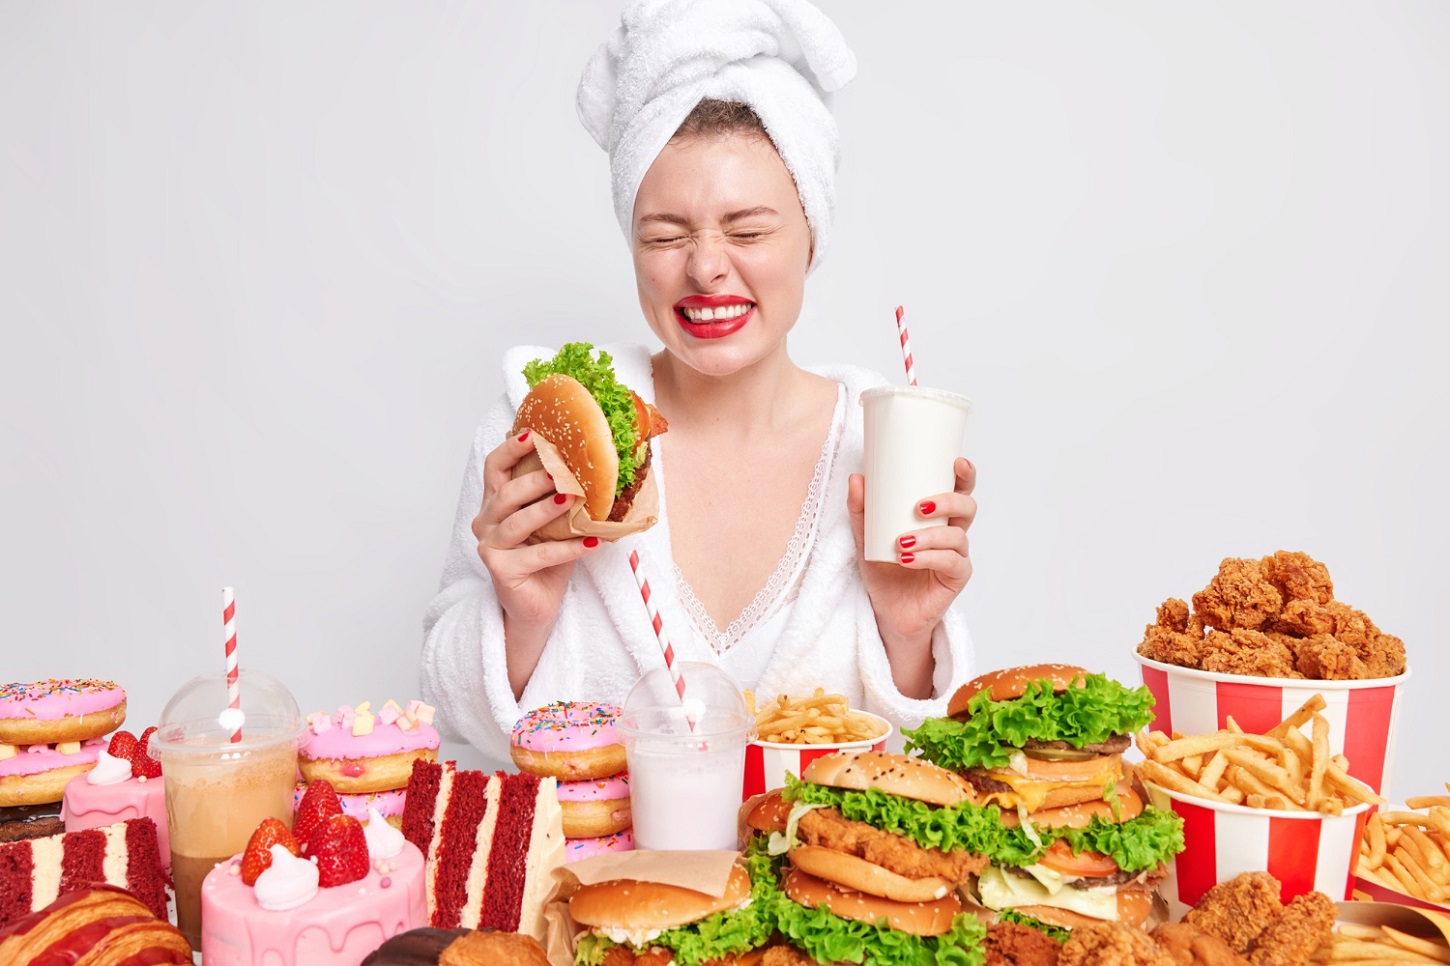 diet-failure-unhealthy-lifestyle-concept-overjoyed-young-woman-holds-hamburger-fizzy-drink_wayhomestudio_freepik.jpg